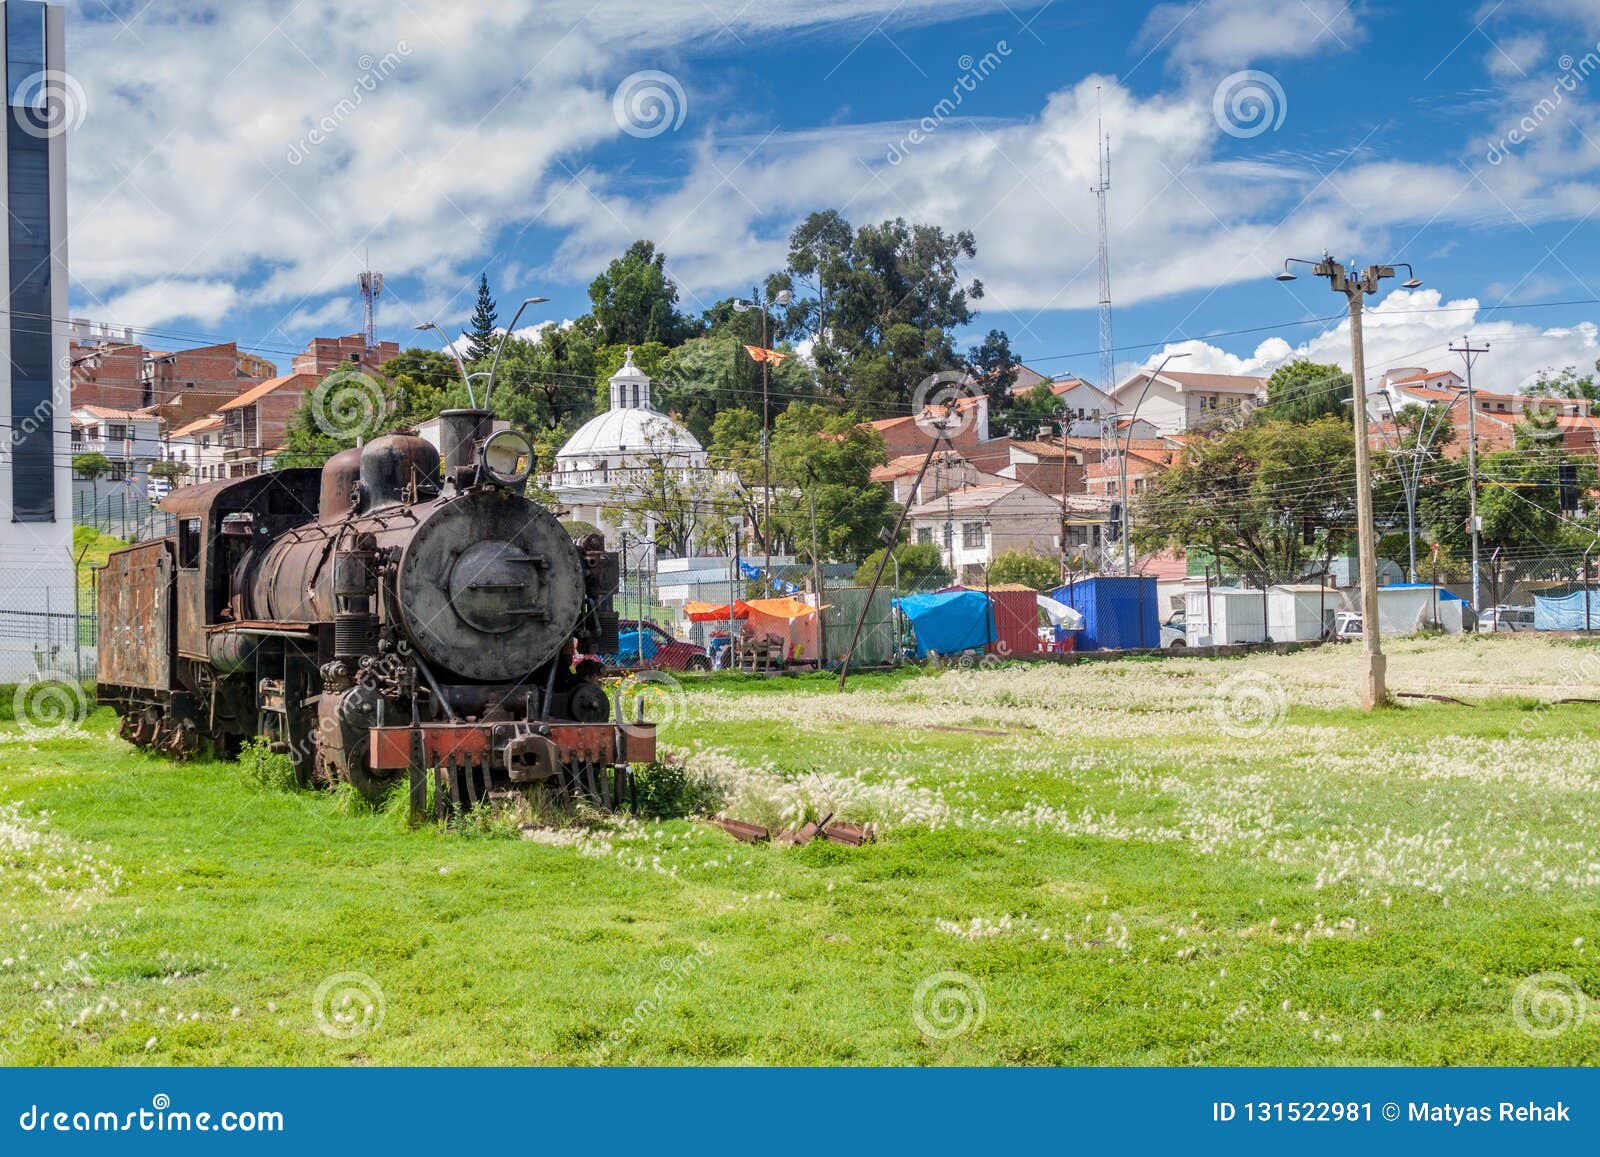 old steam train engine near estacion presidente arce, old railway station in sucre, boliv